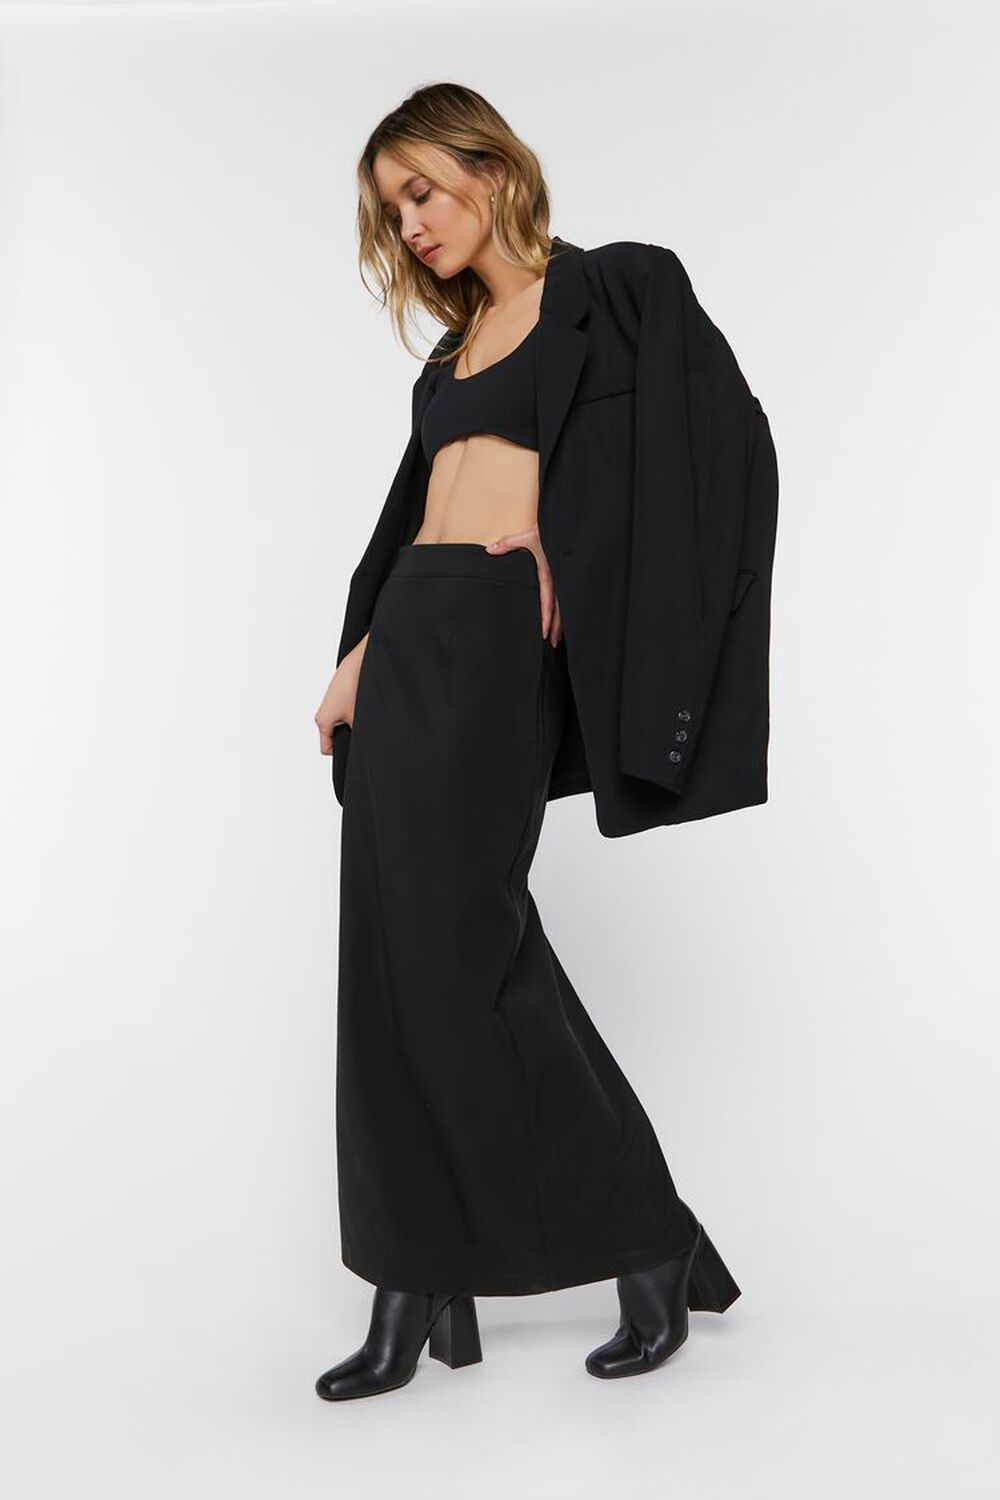 BLACK Zip-Slit Maxi Skirt, image 1